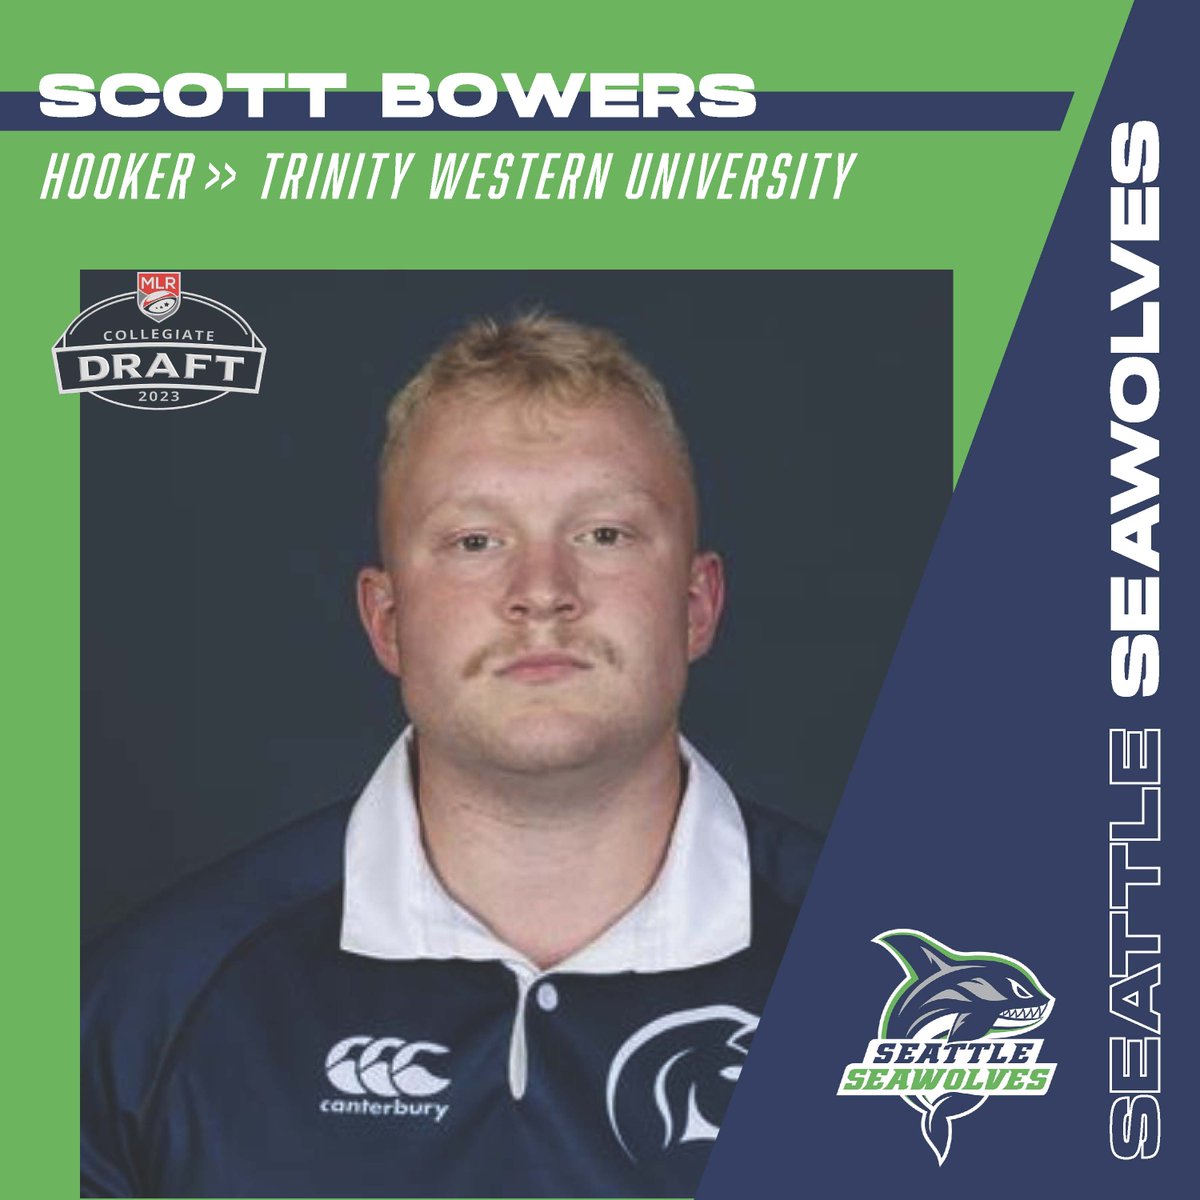 Look who's in the hunt! 

#TogetherWeHunt #MLRDraft #SeattleSeawolves #Rugby
#ScottBowers #TrinityWesternUniversity #Spartans